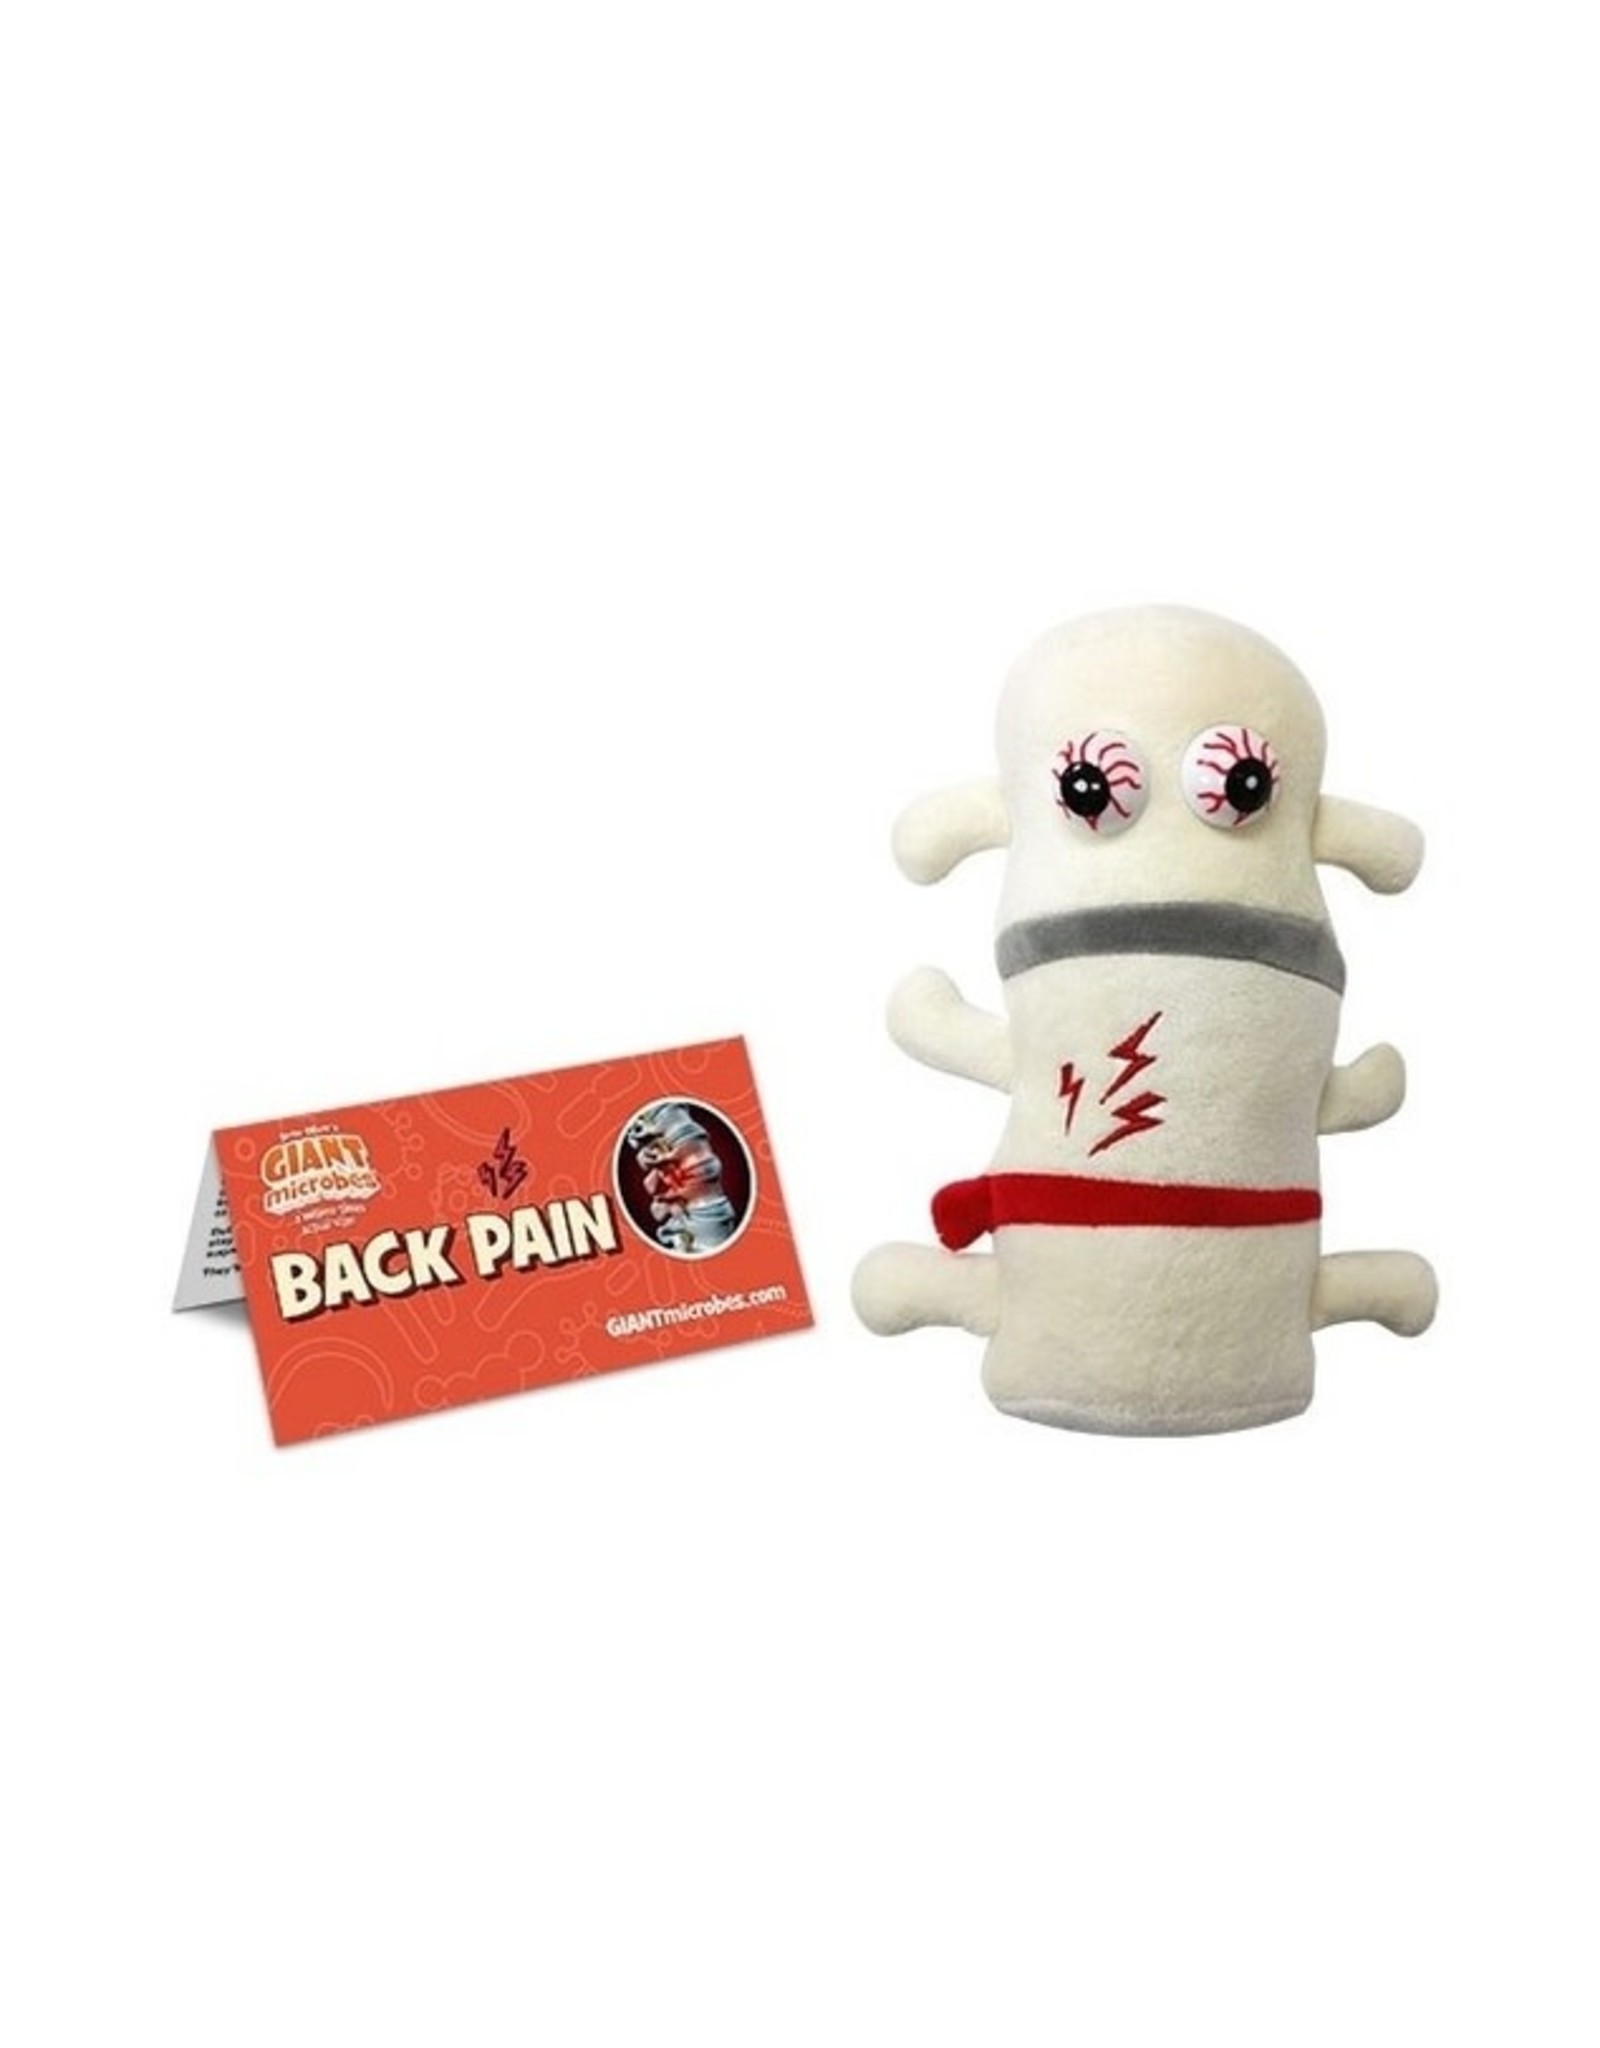 GIANTmicrobes Back Pain